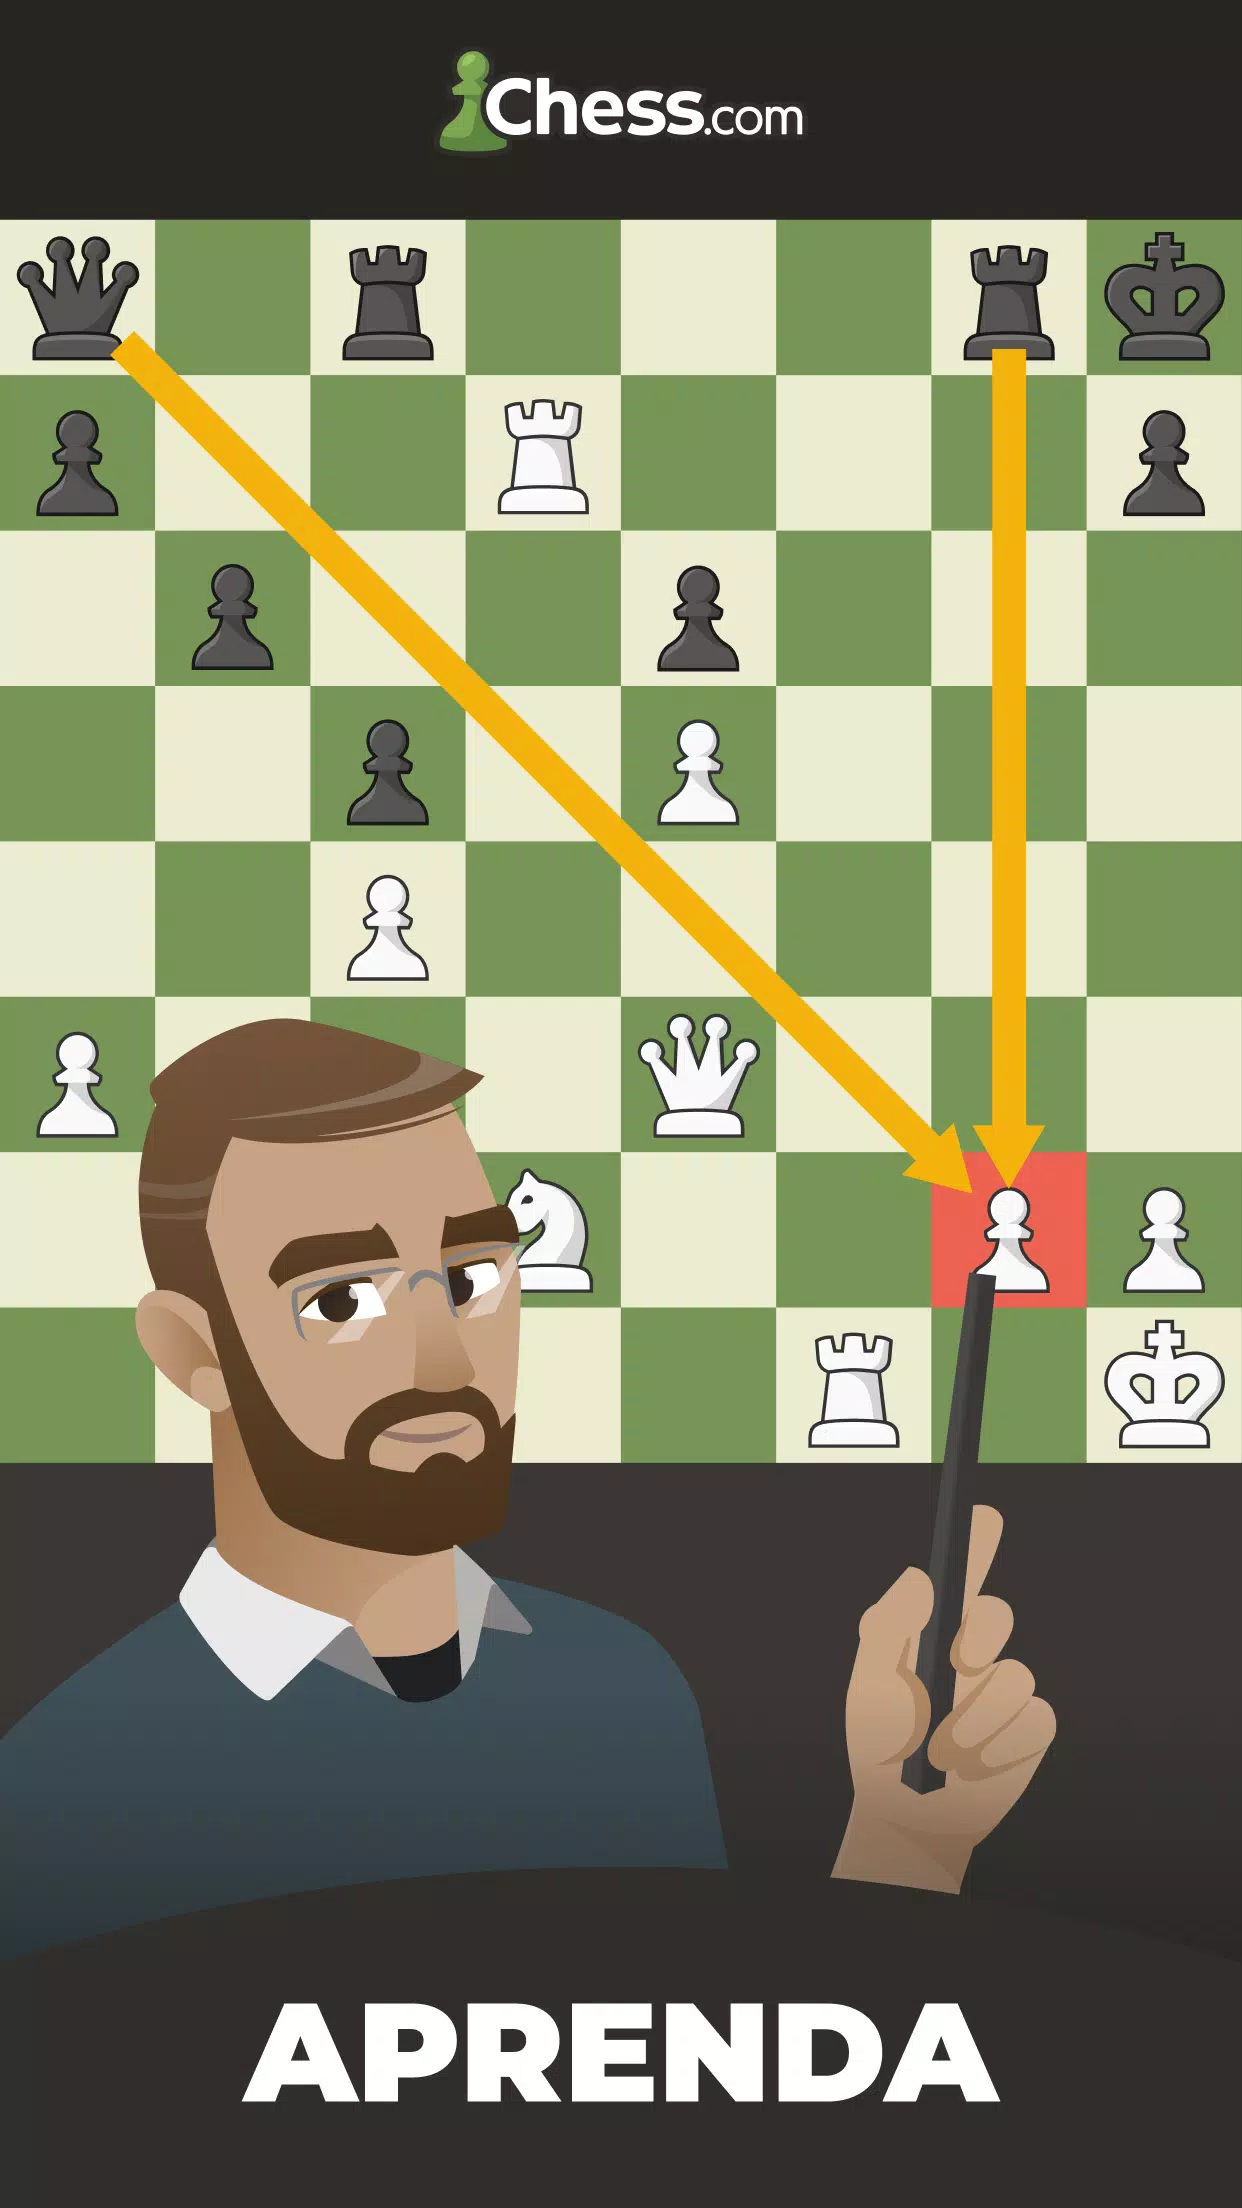 Download do APK de xadrez online 3d para Android